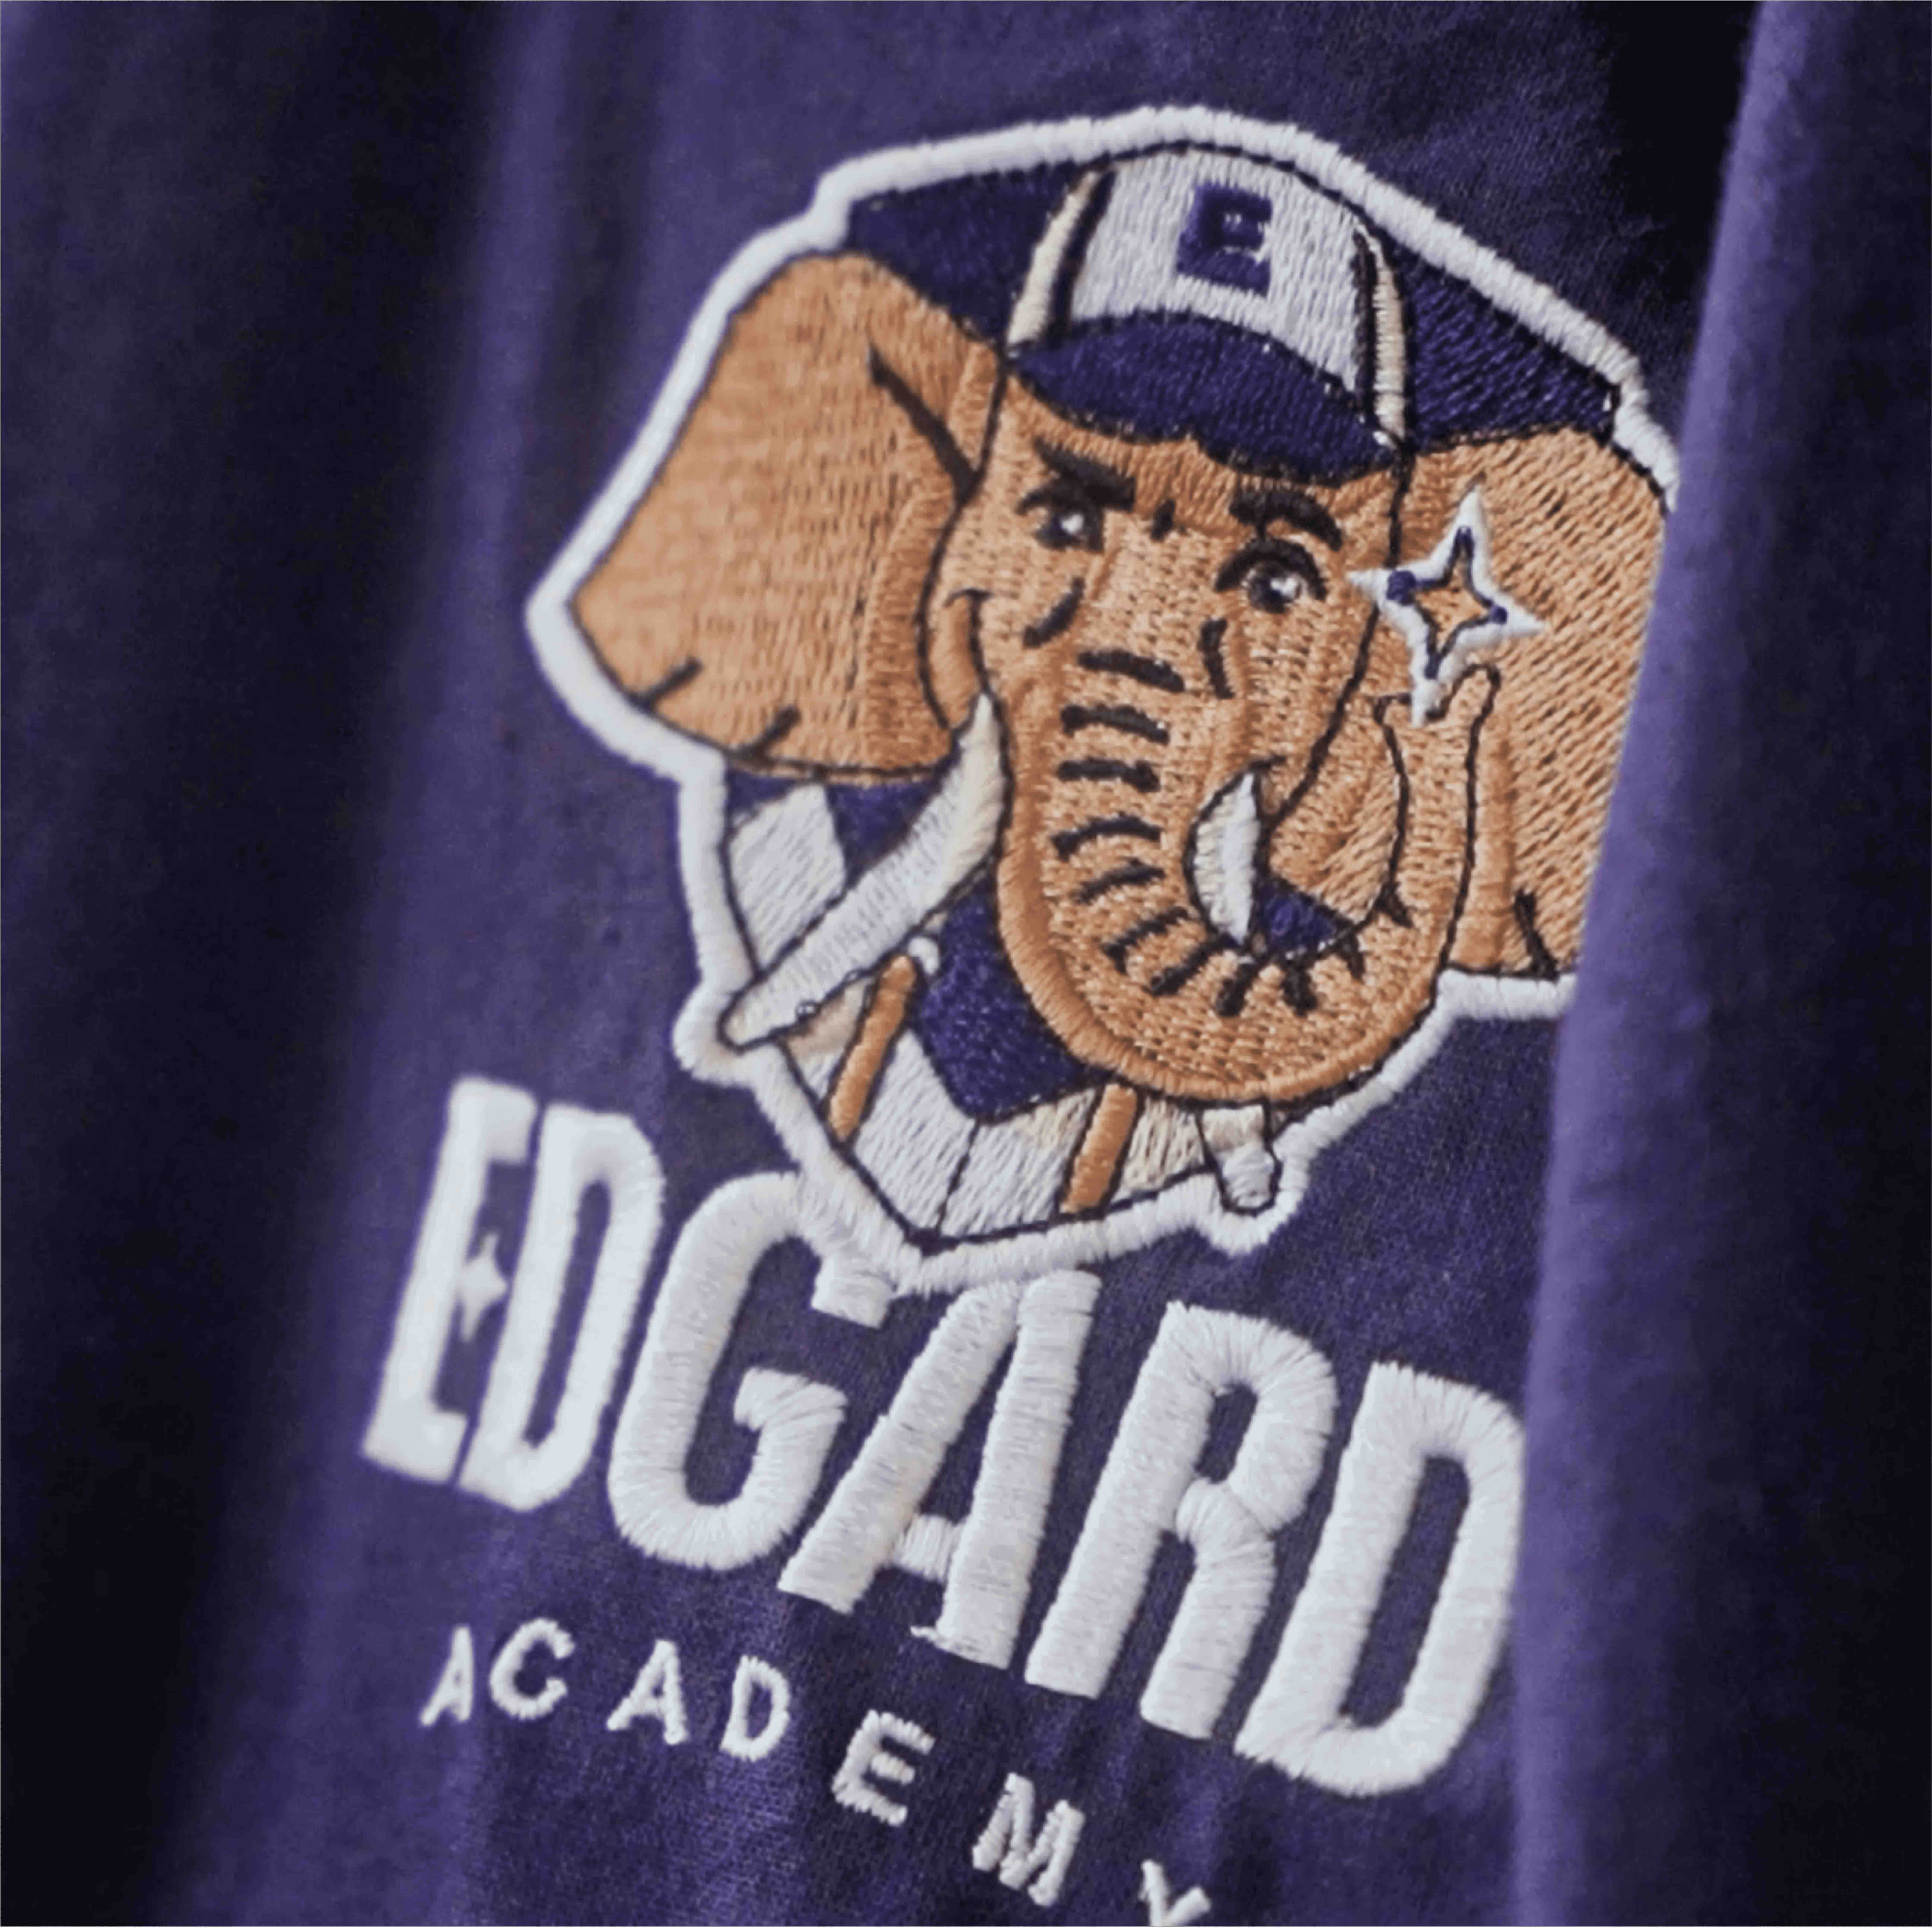 edgard-academy-groupe-edgard